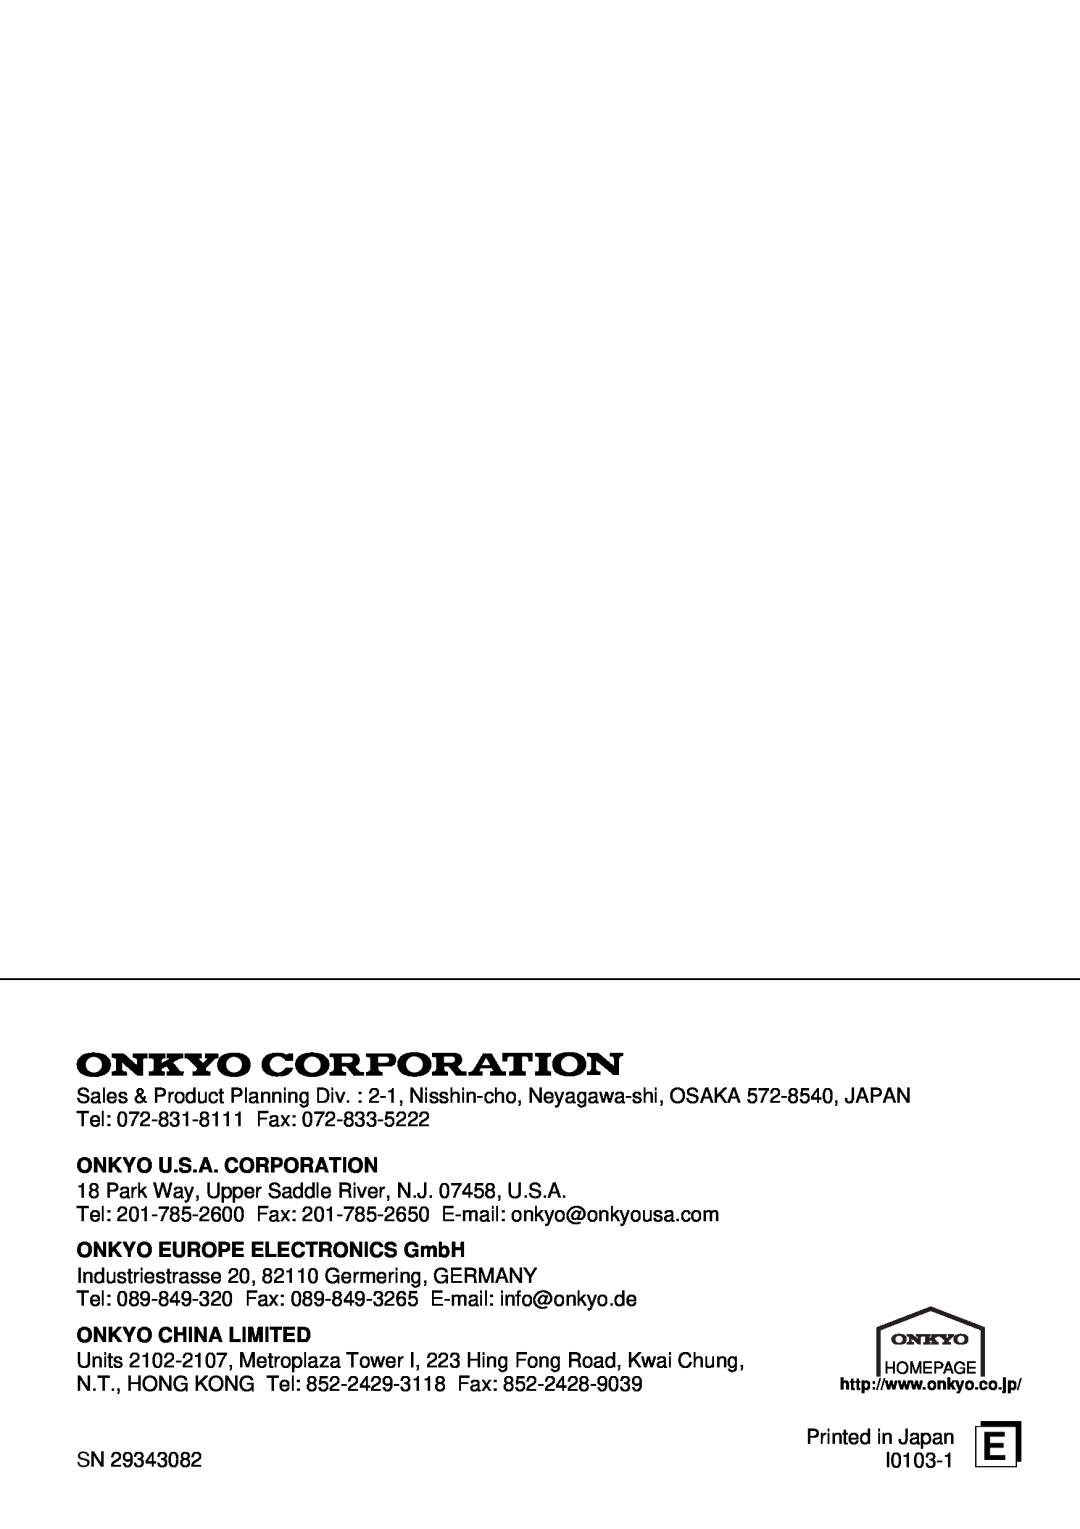 Onkyo C-705TX instruction manual Onkyo U.S.A. Corporation, ONKYO EUROPE ELECTRONICS GmbH, Onkyo China Limited 